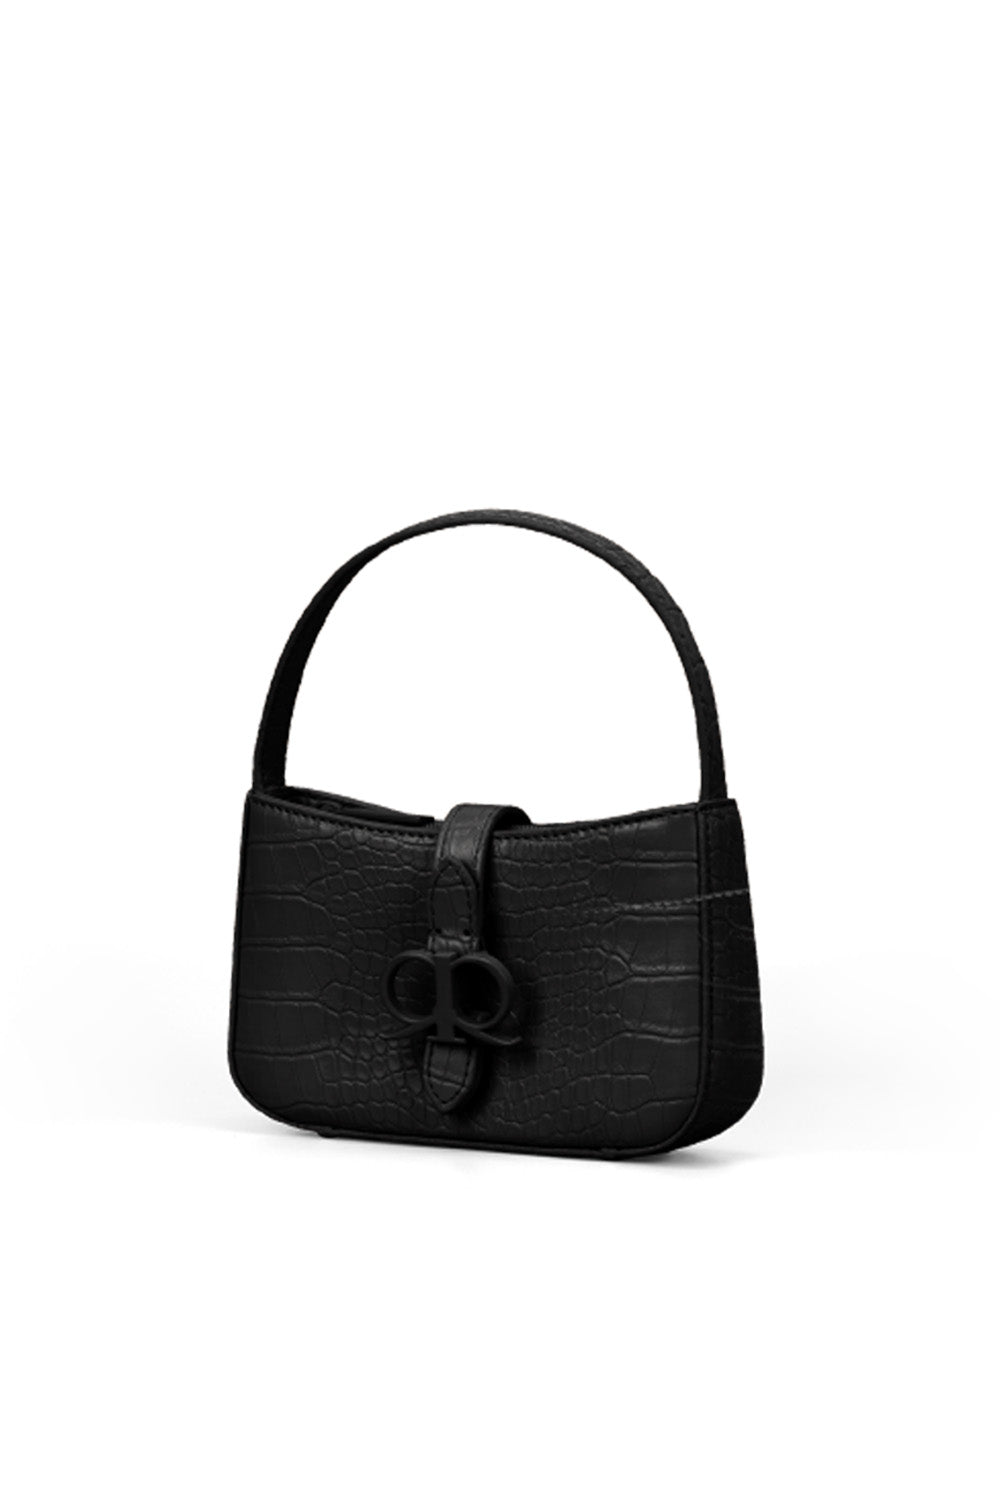 RR Juliet Croco Mini Shoulder Bag in Black